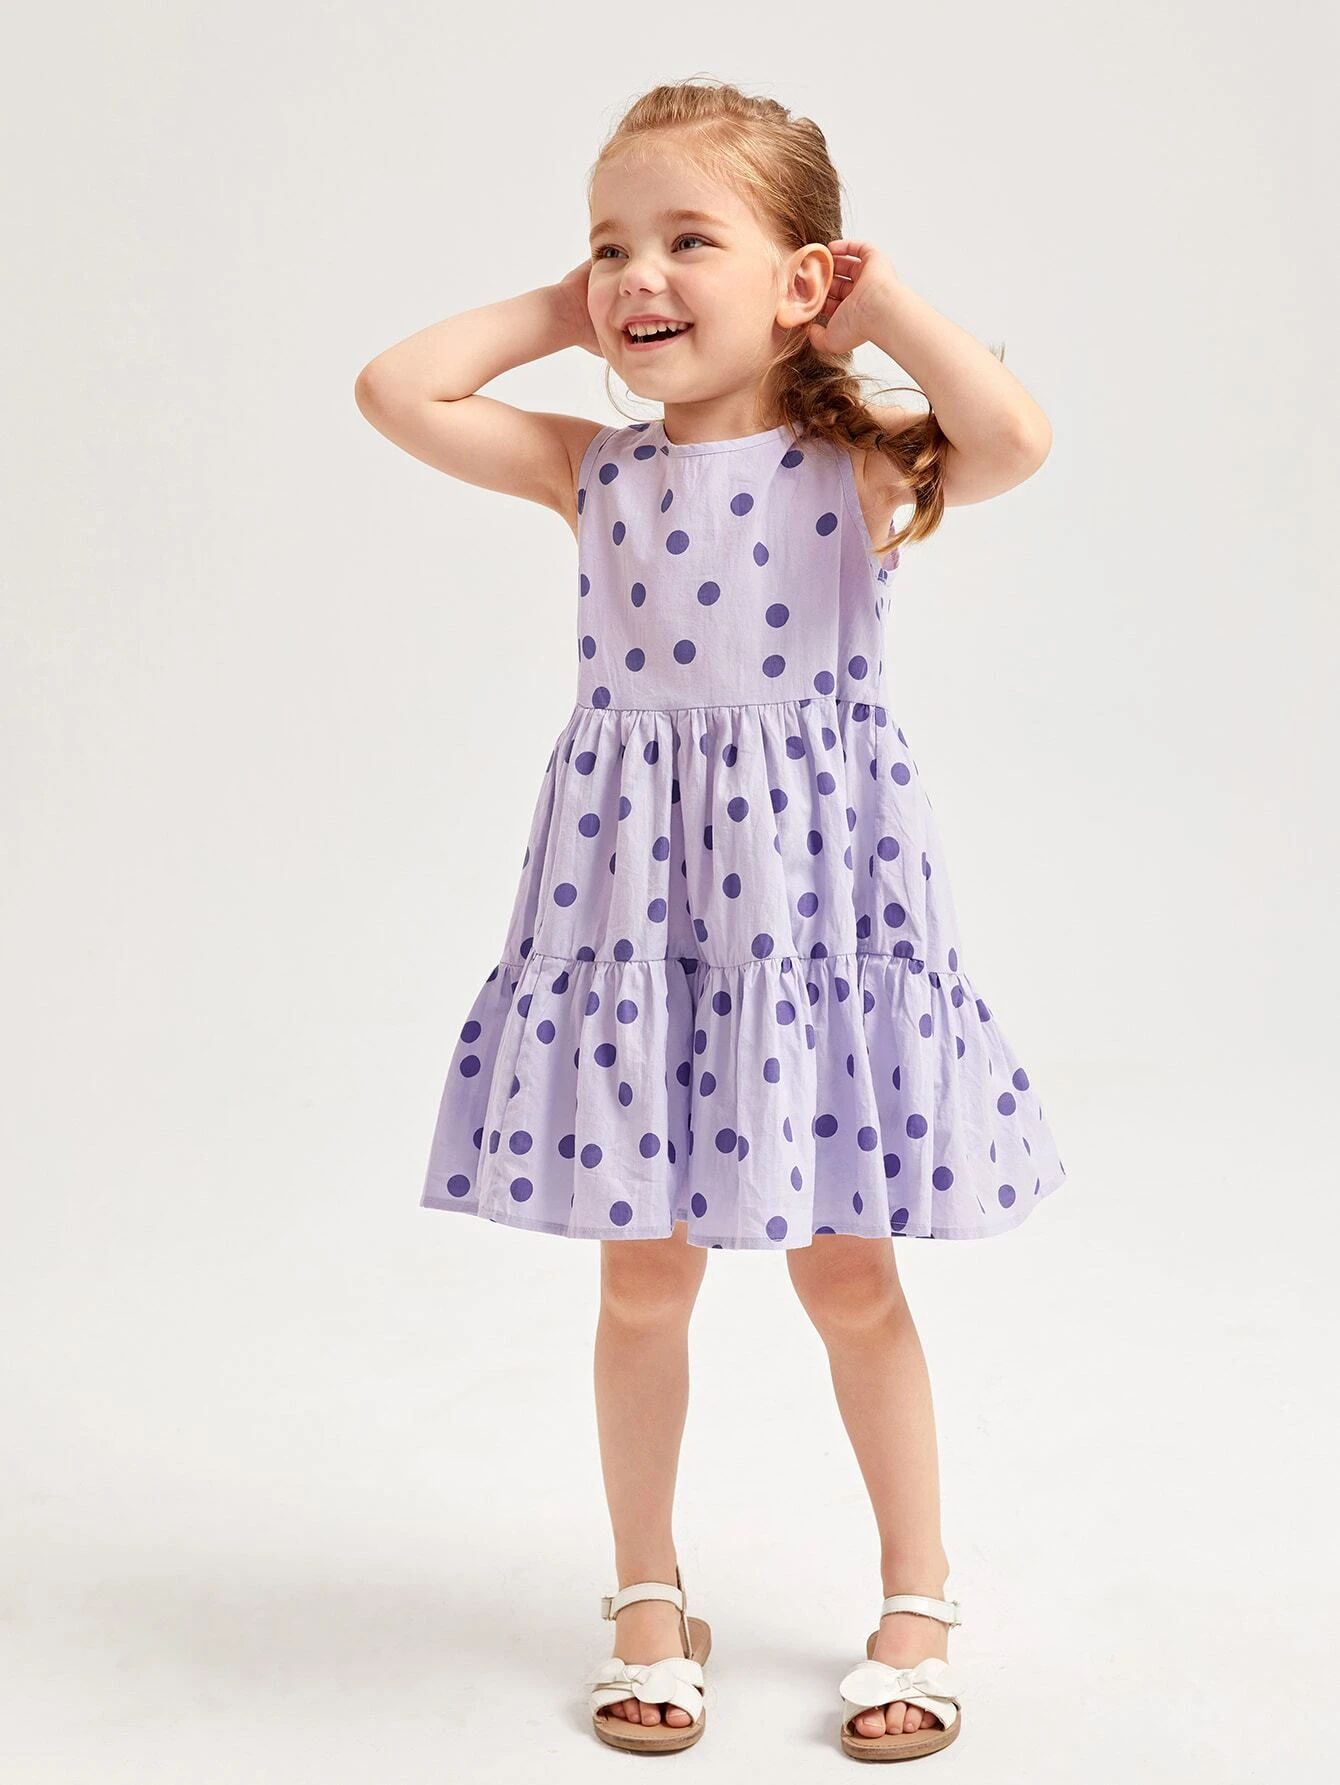 SHEIN Toddler Girls Polka Dot Smock Dress | SHEIN